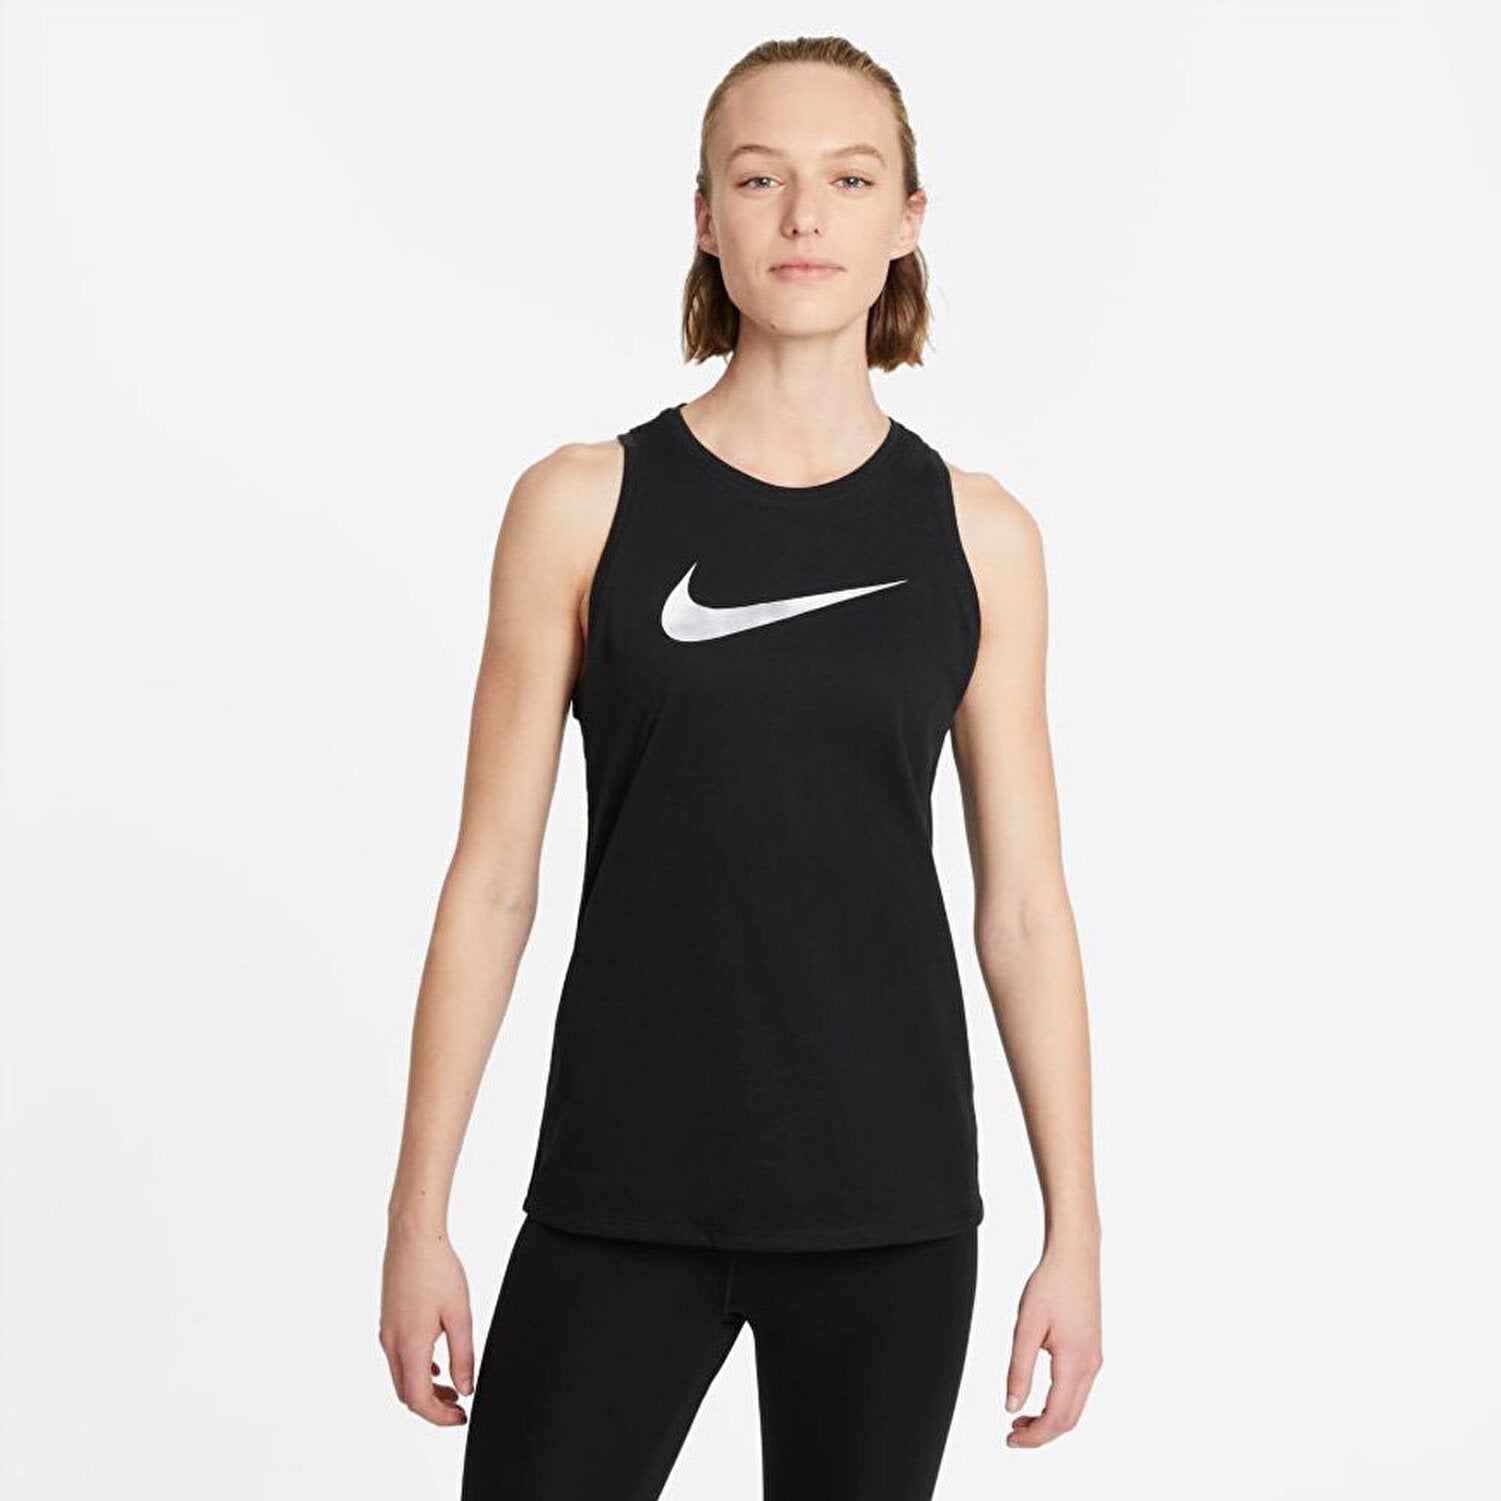 Nike Dry-FIT Black tank top women